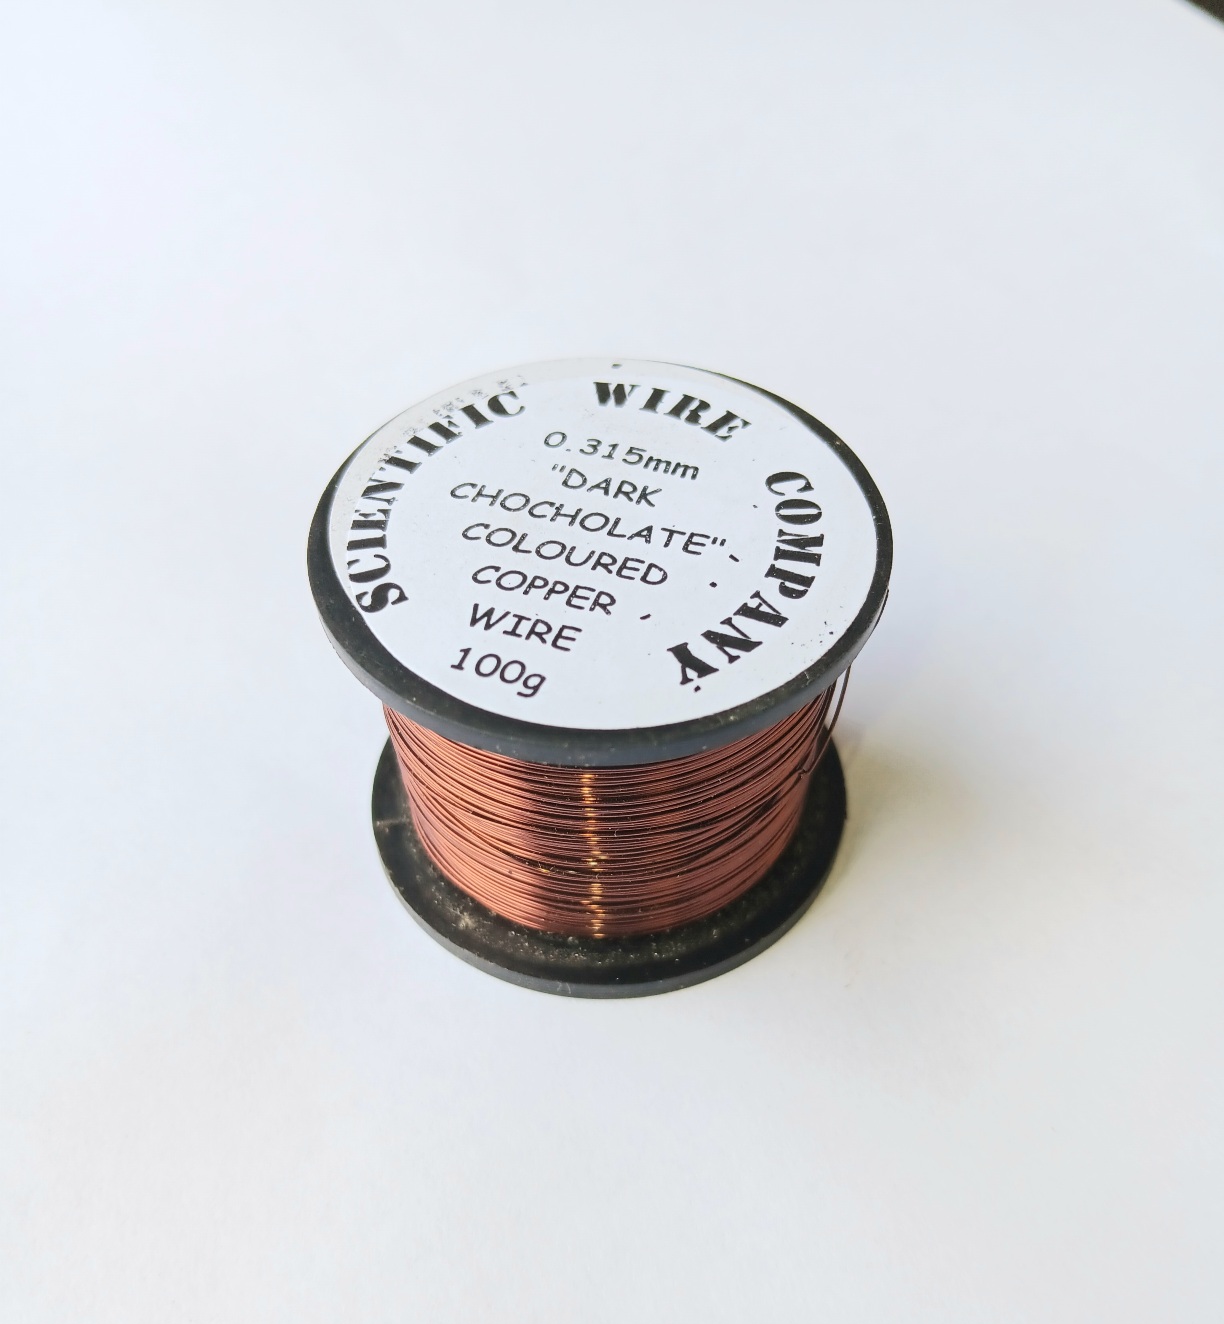 100g 0.315mm DARK CHOCOLATE Coloured Enamelled Copper Wire